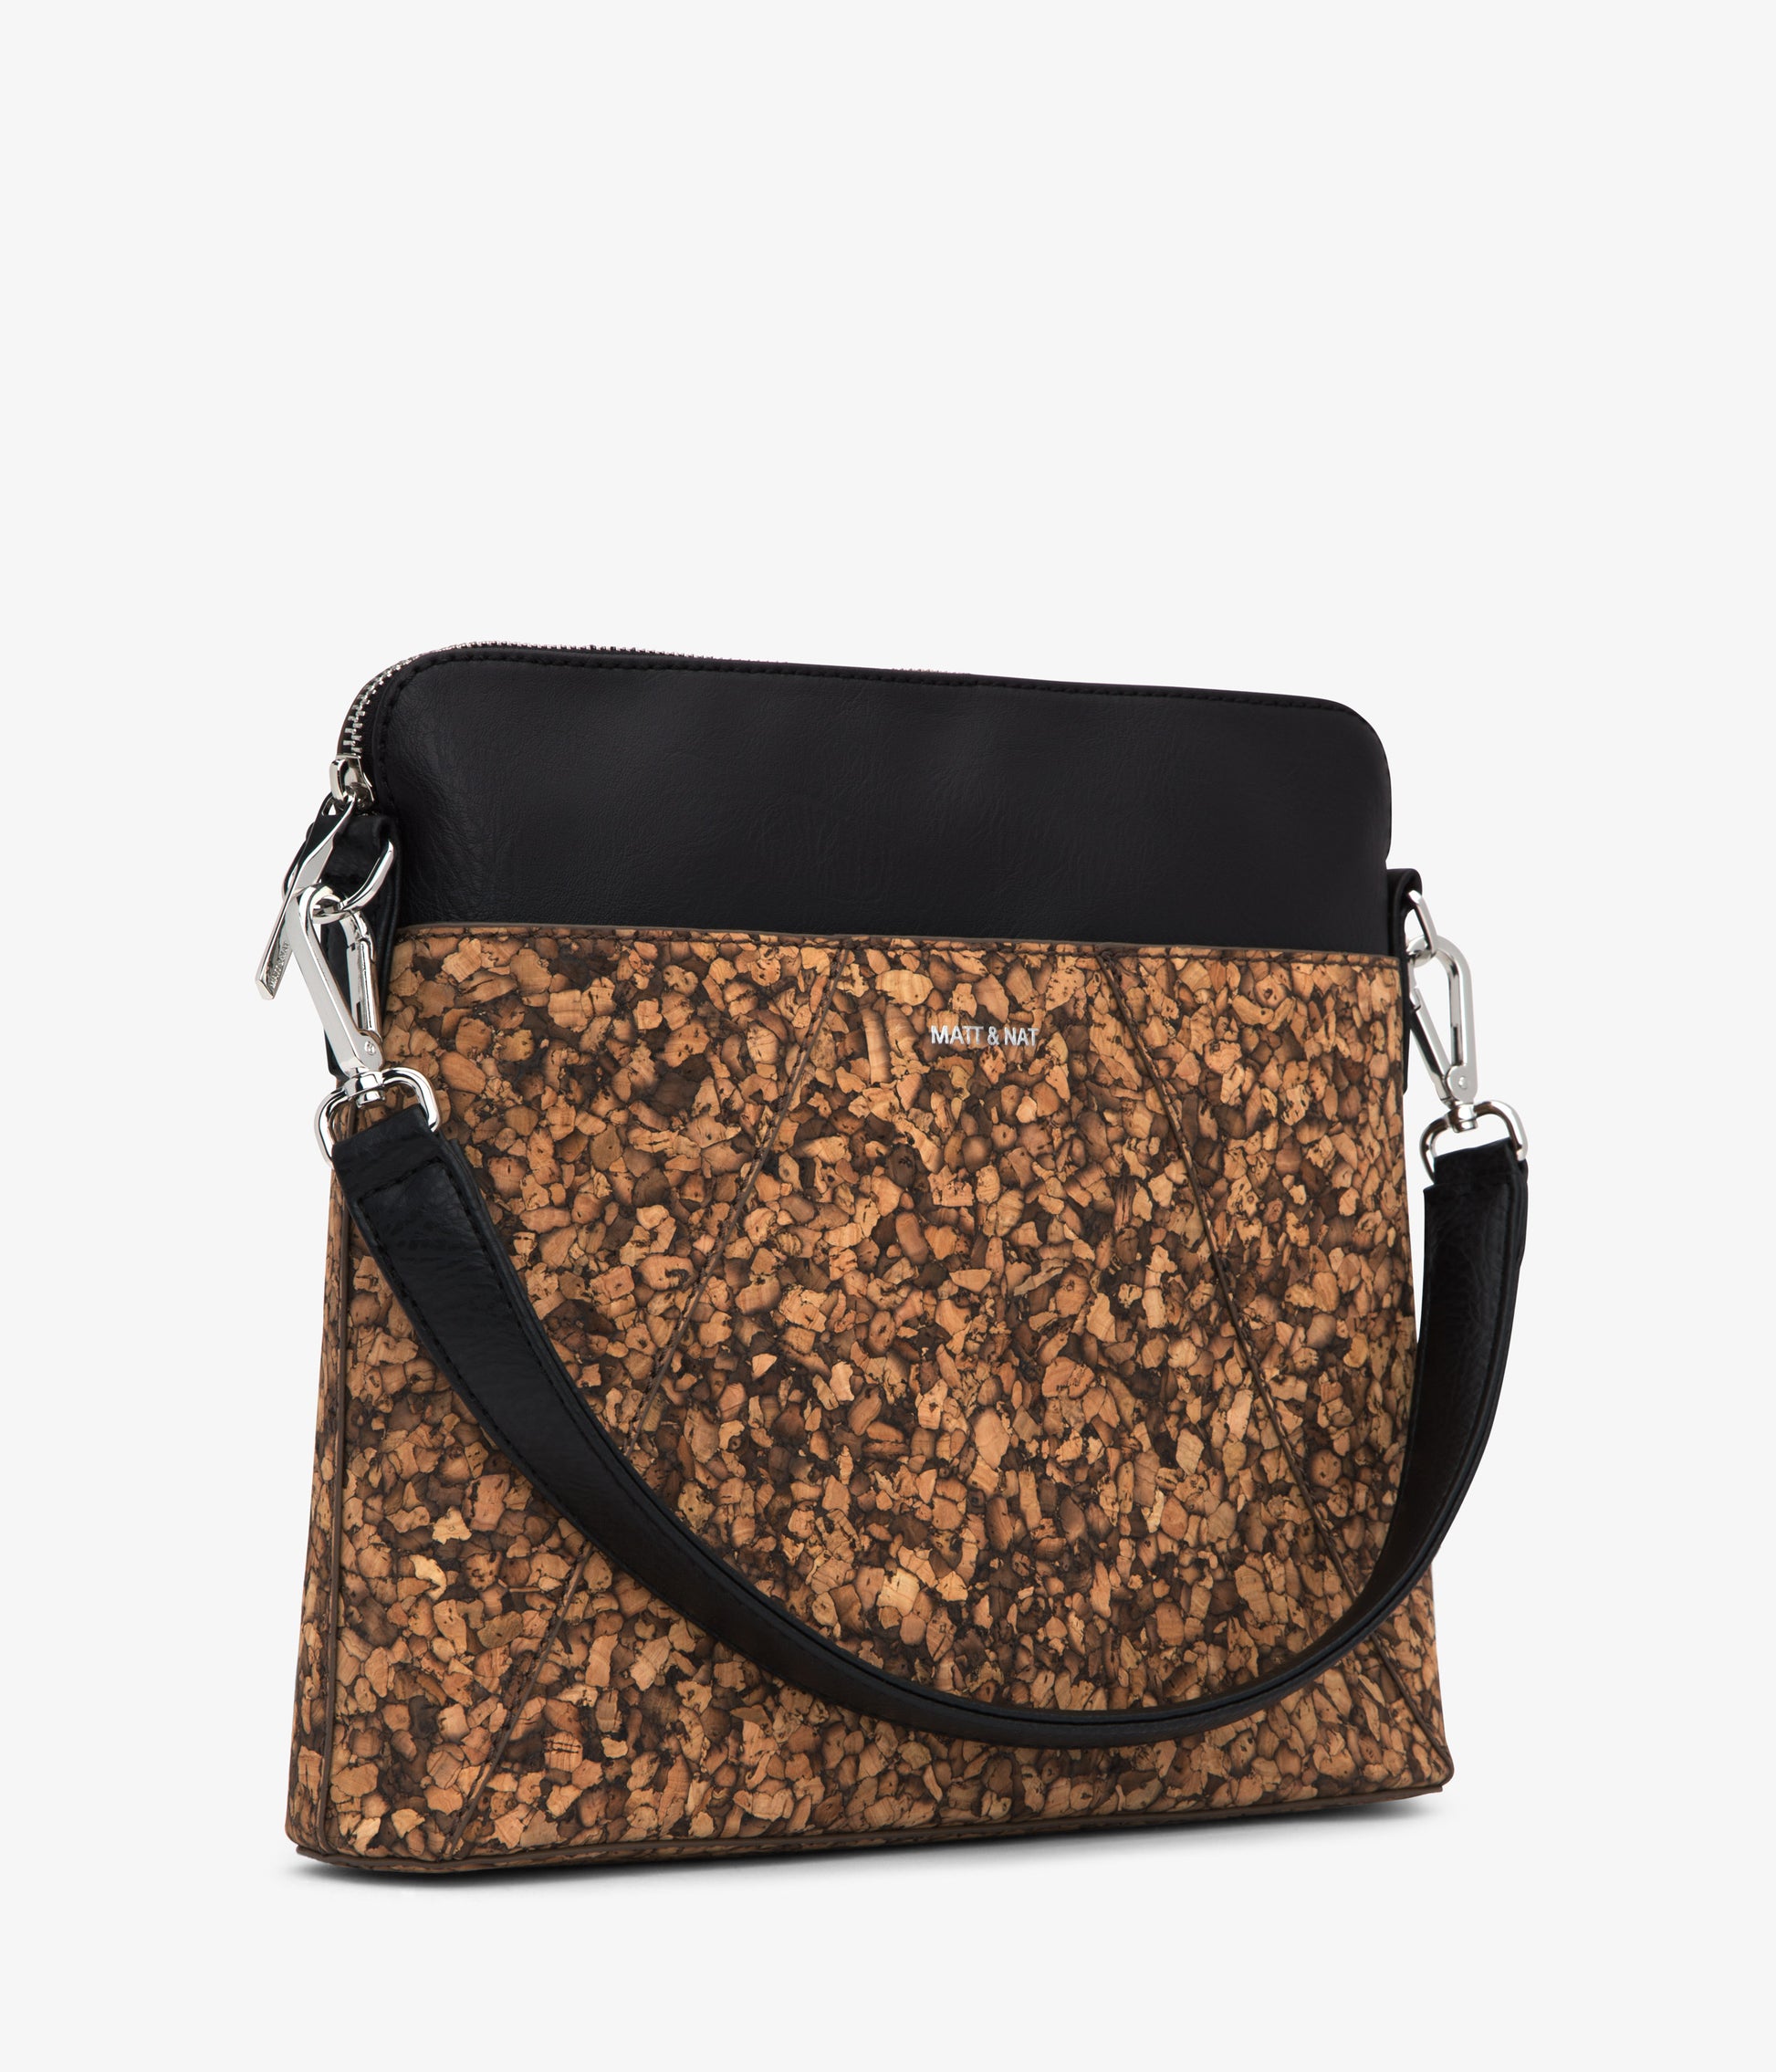 Women's Cork Crossbody Bag, Handbags Made in Portugal, Vegan Leather  Purses, US | eBay